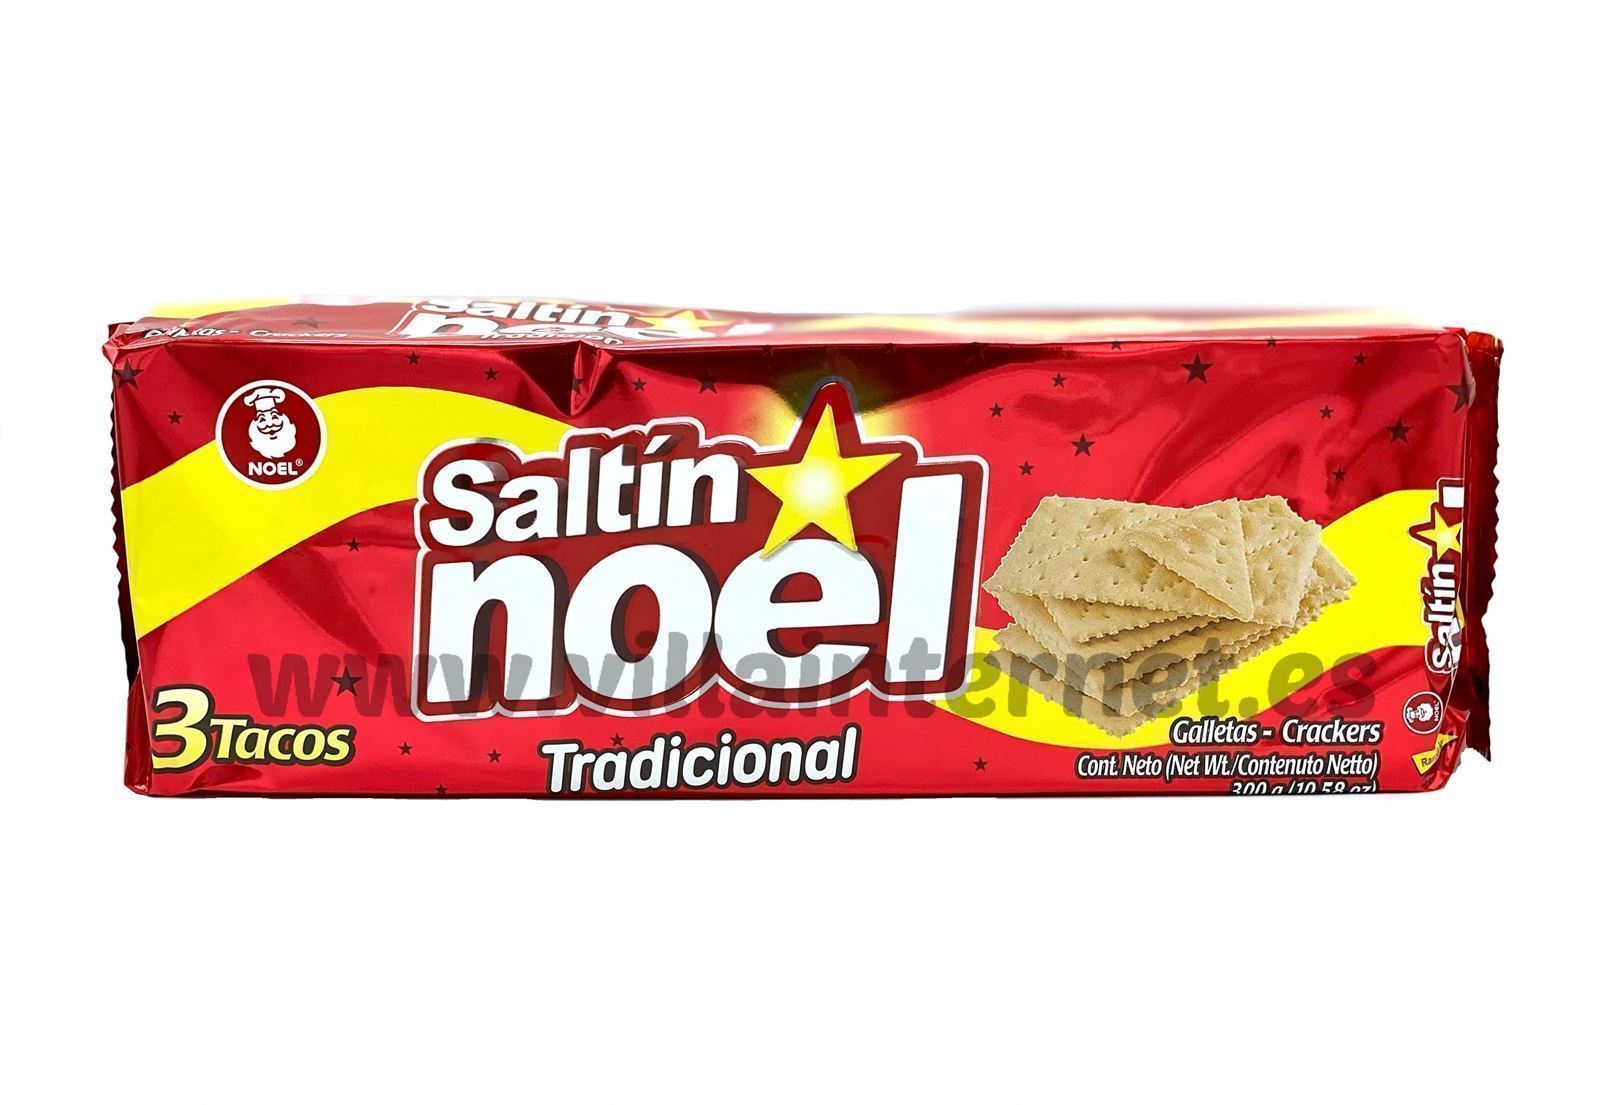 Galletas saltín noel tradicional 300g - Imagen 1